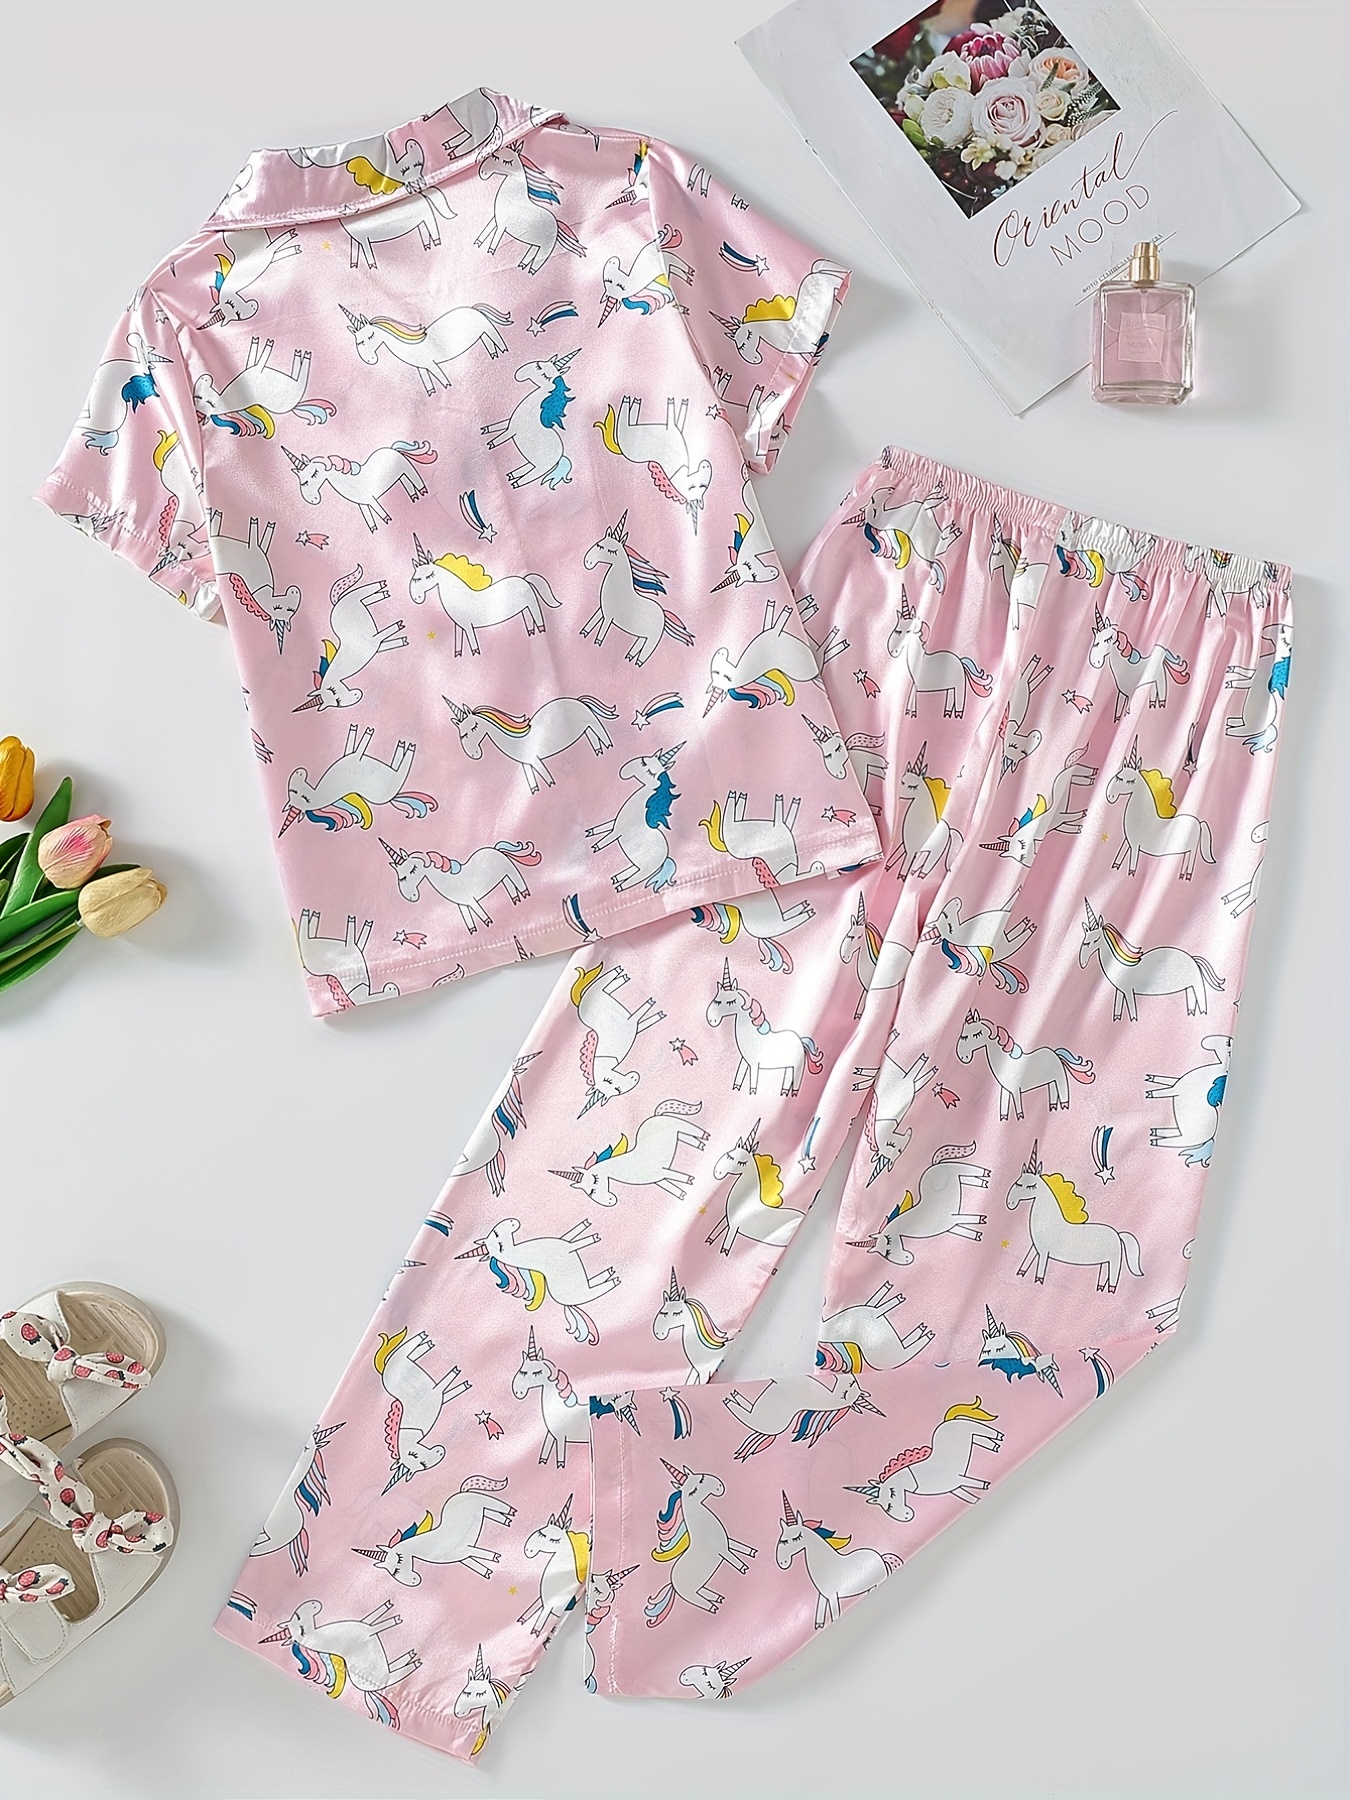 Caticorn Riding The Unicorn on The Rainbow Women's Pajamas Set Button Down  Sleepwear PJ Set Loungewear Night Suit with Pocket 